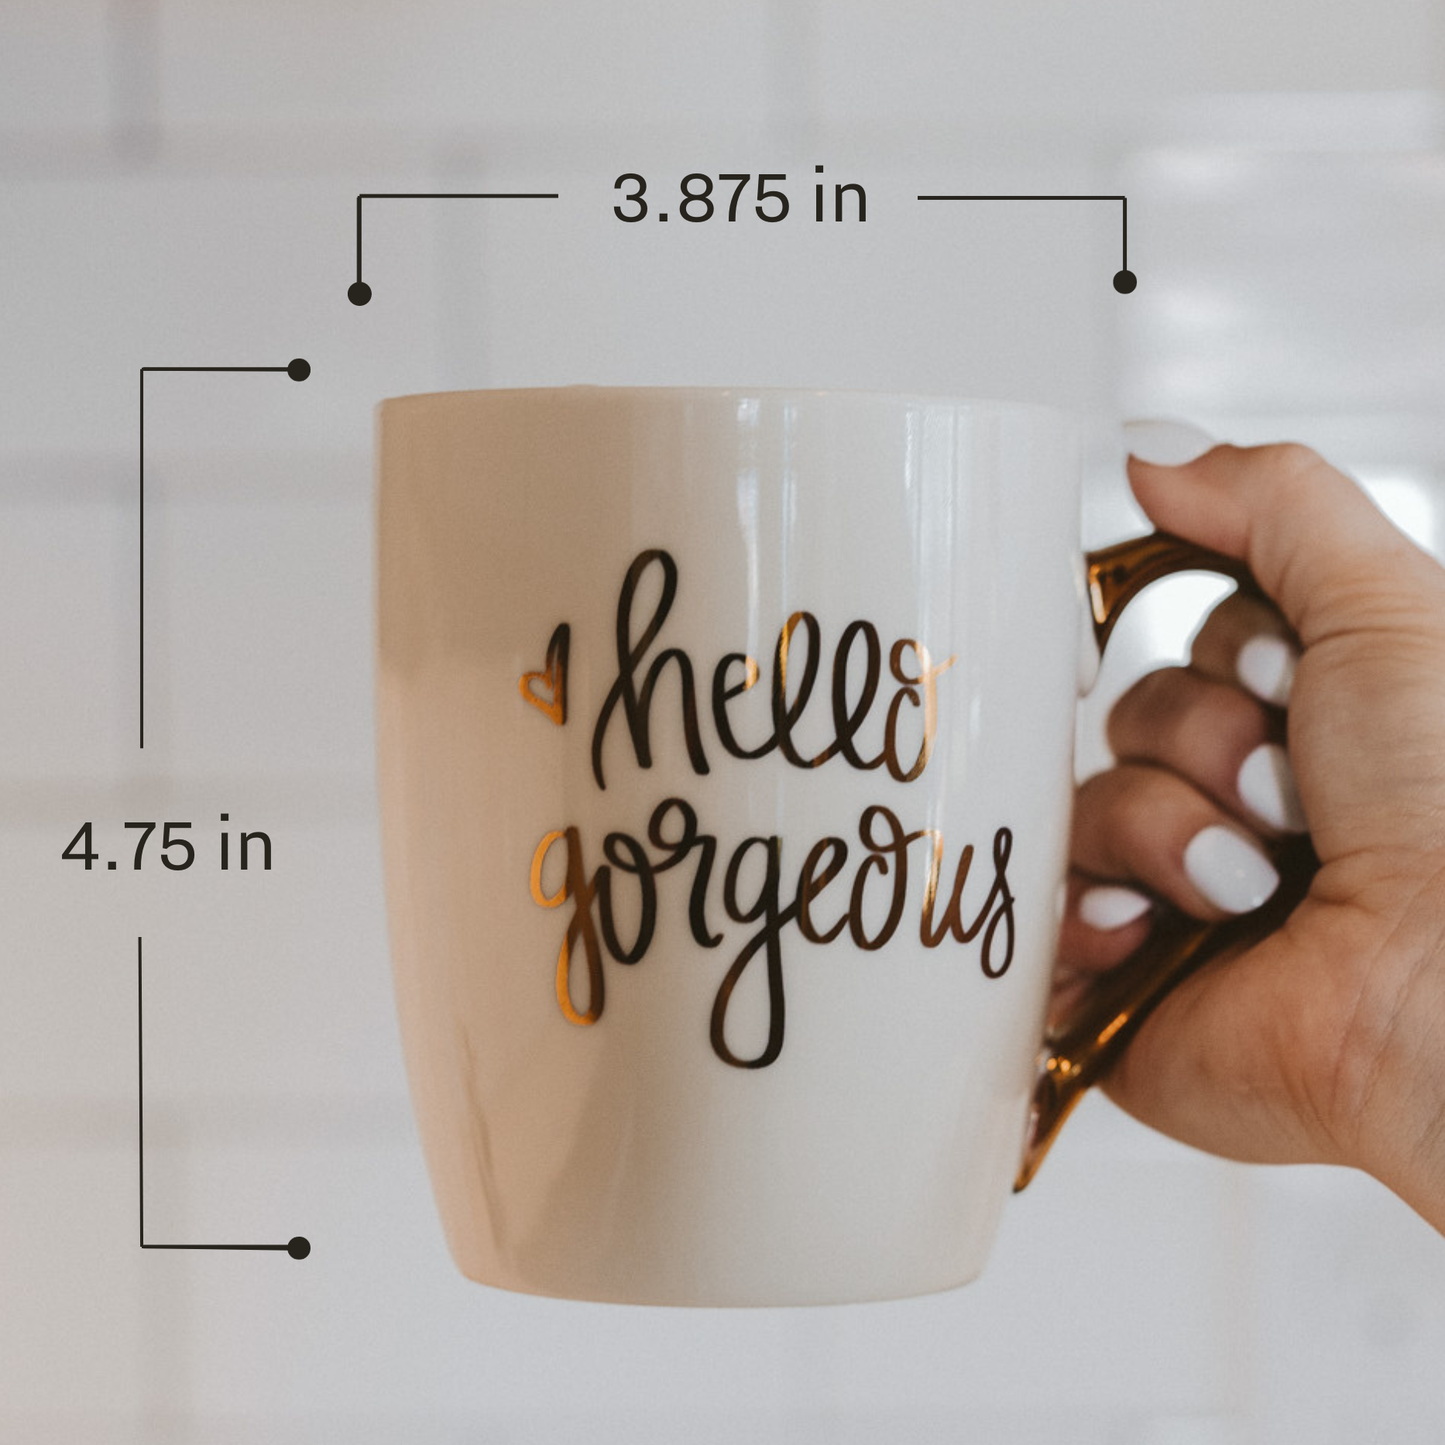 Hello Gorgeous Coffee Mug - Gifts & Home Decor